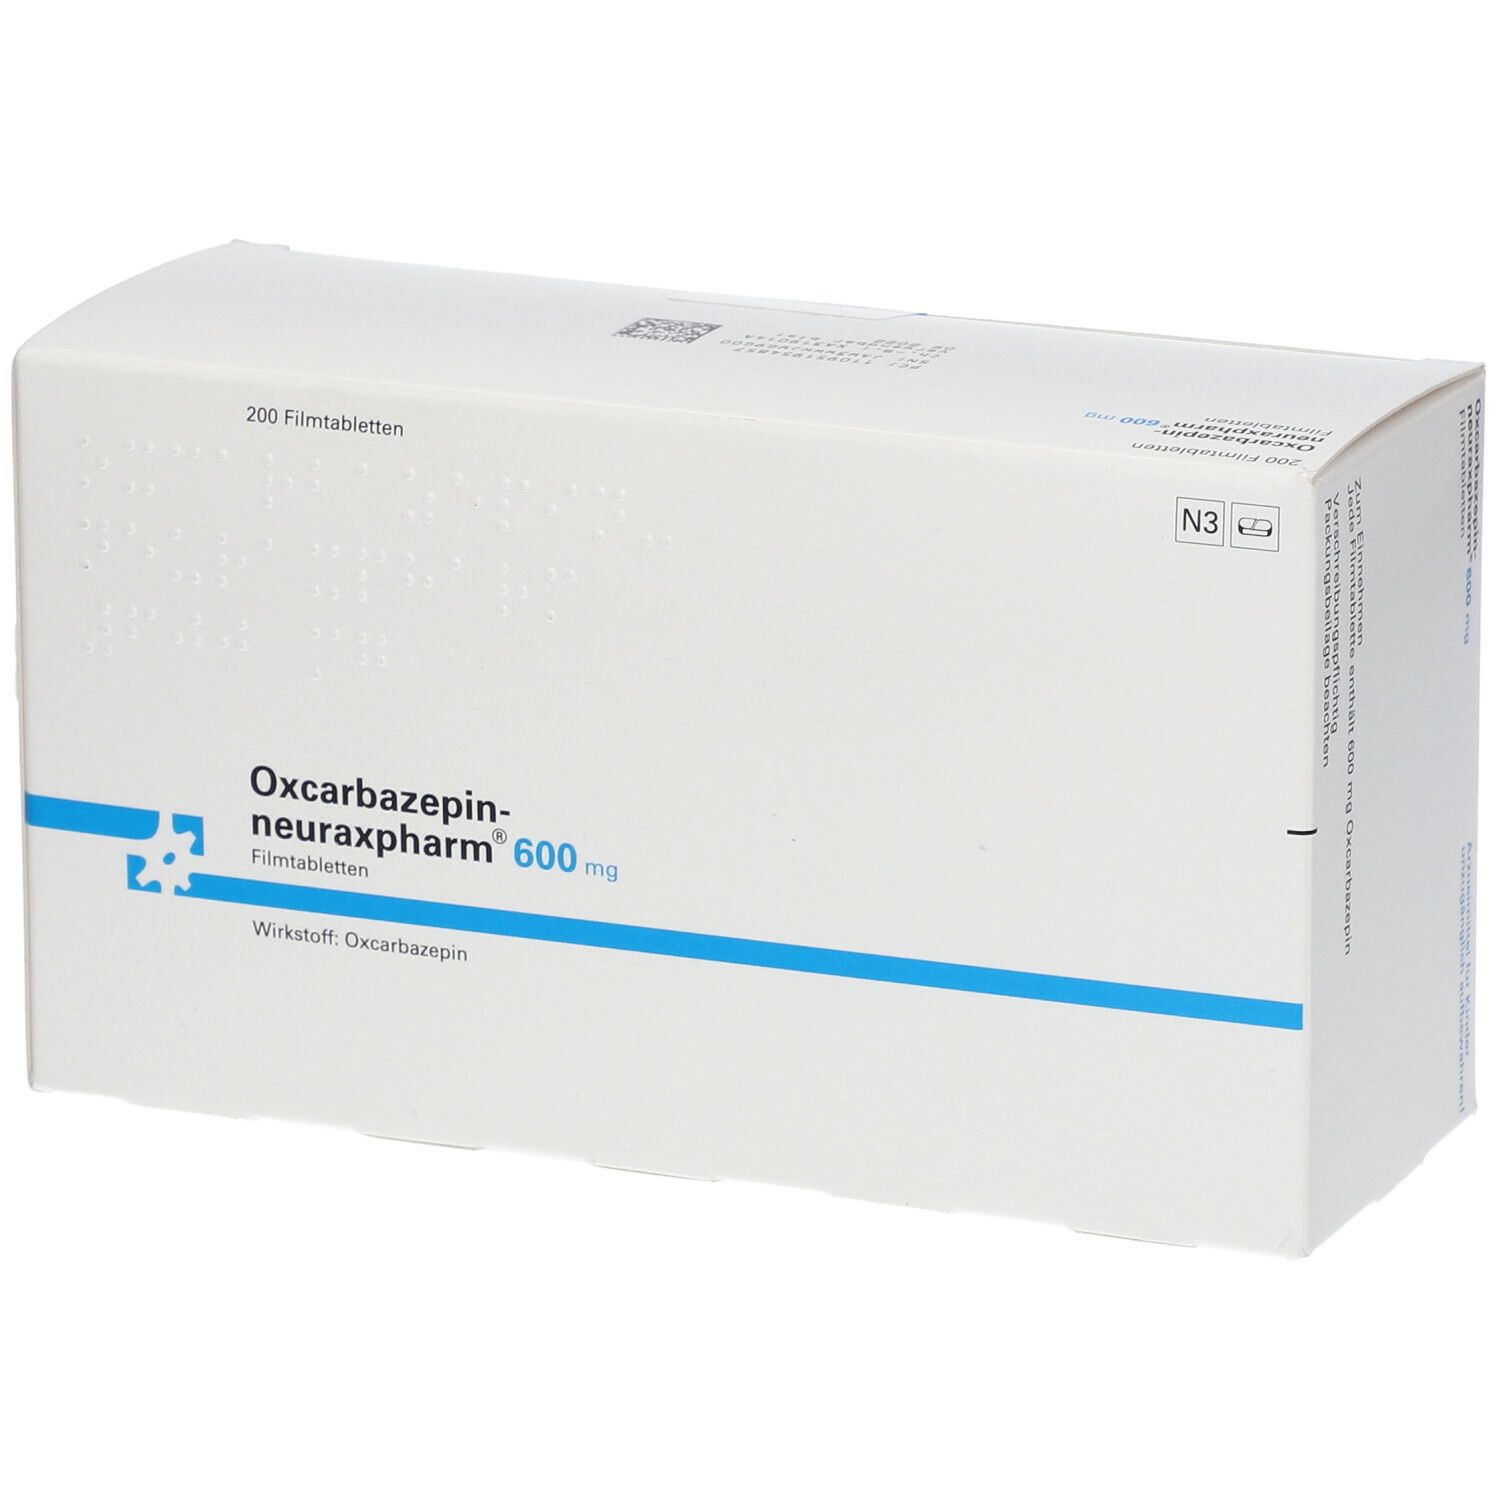 Oxcarbazepin-neuraxpharm® 600 mg